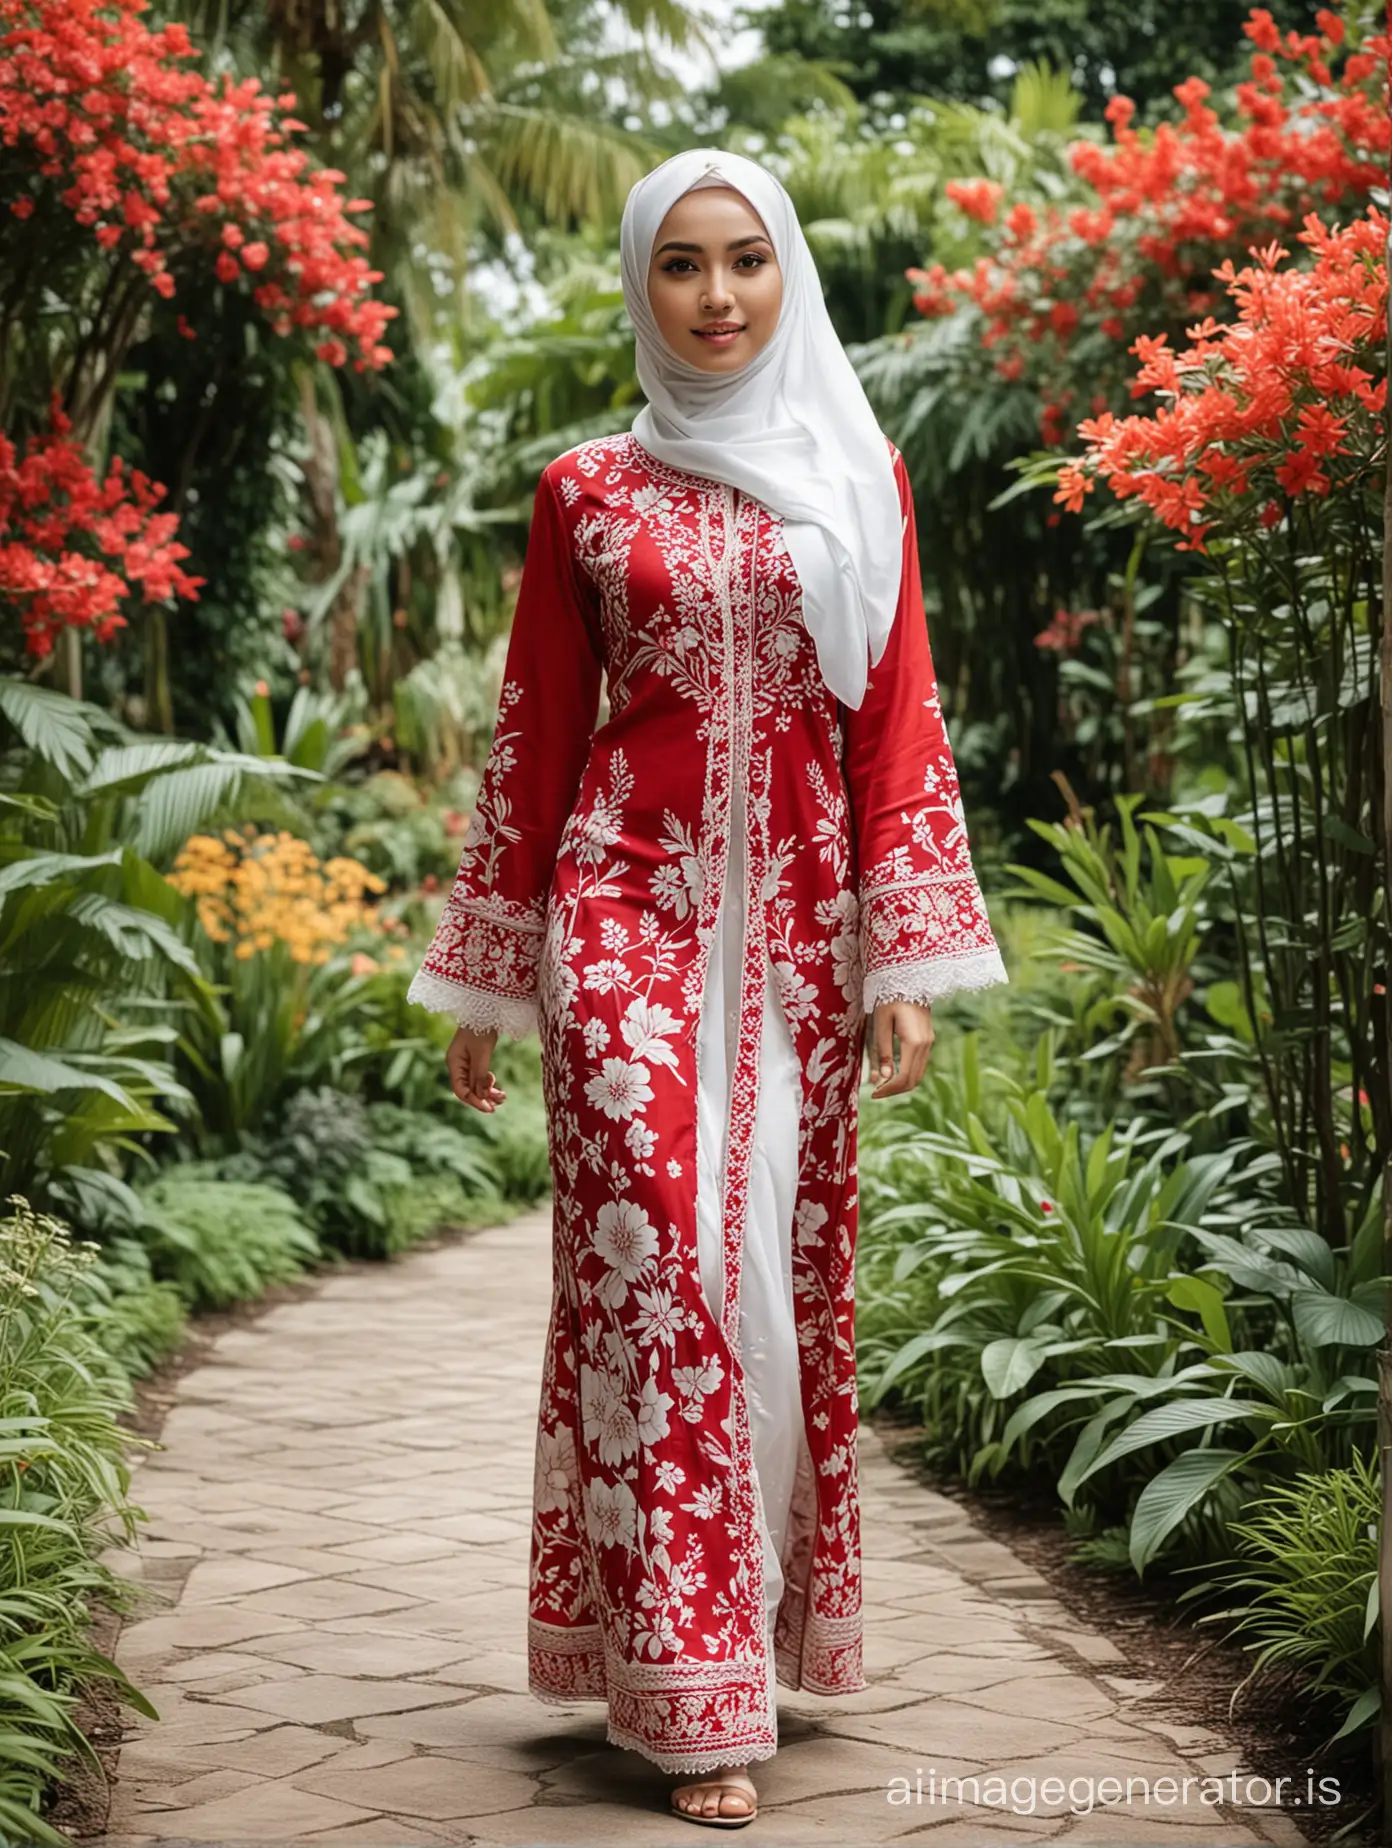 A beautiful girl wearing a hijab wearing a red and white kebaya walks in a beautiful garden